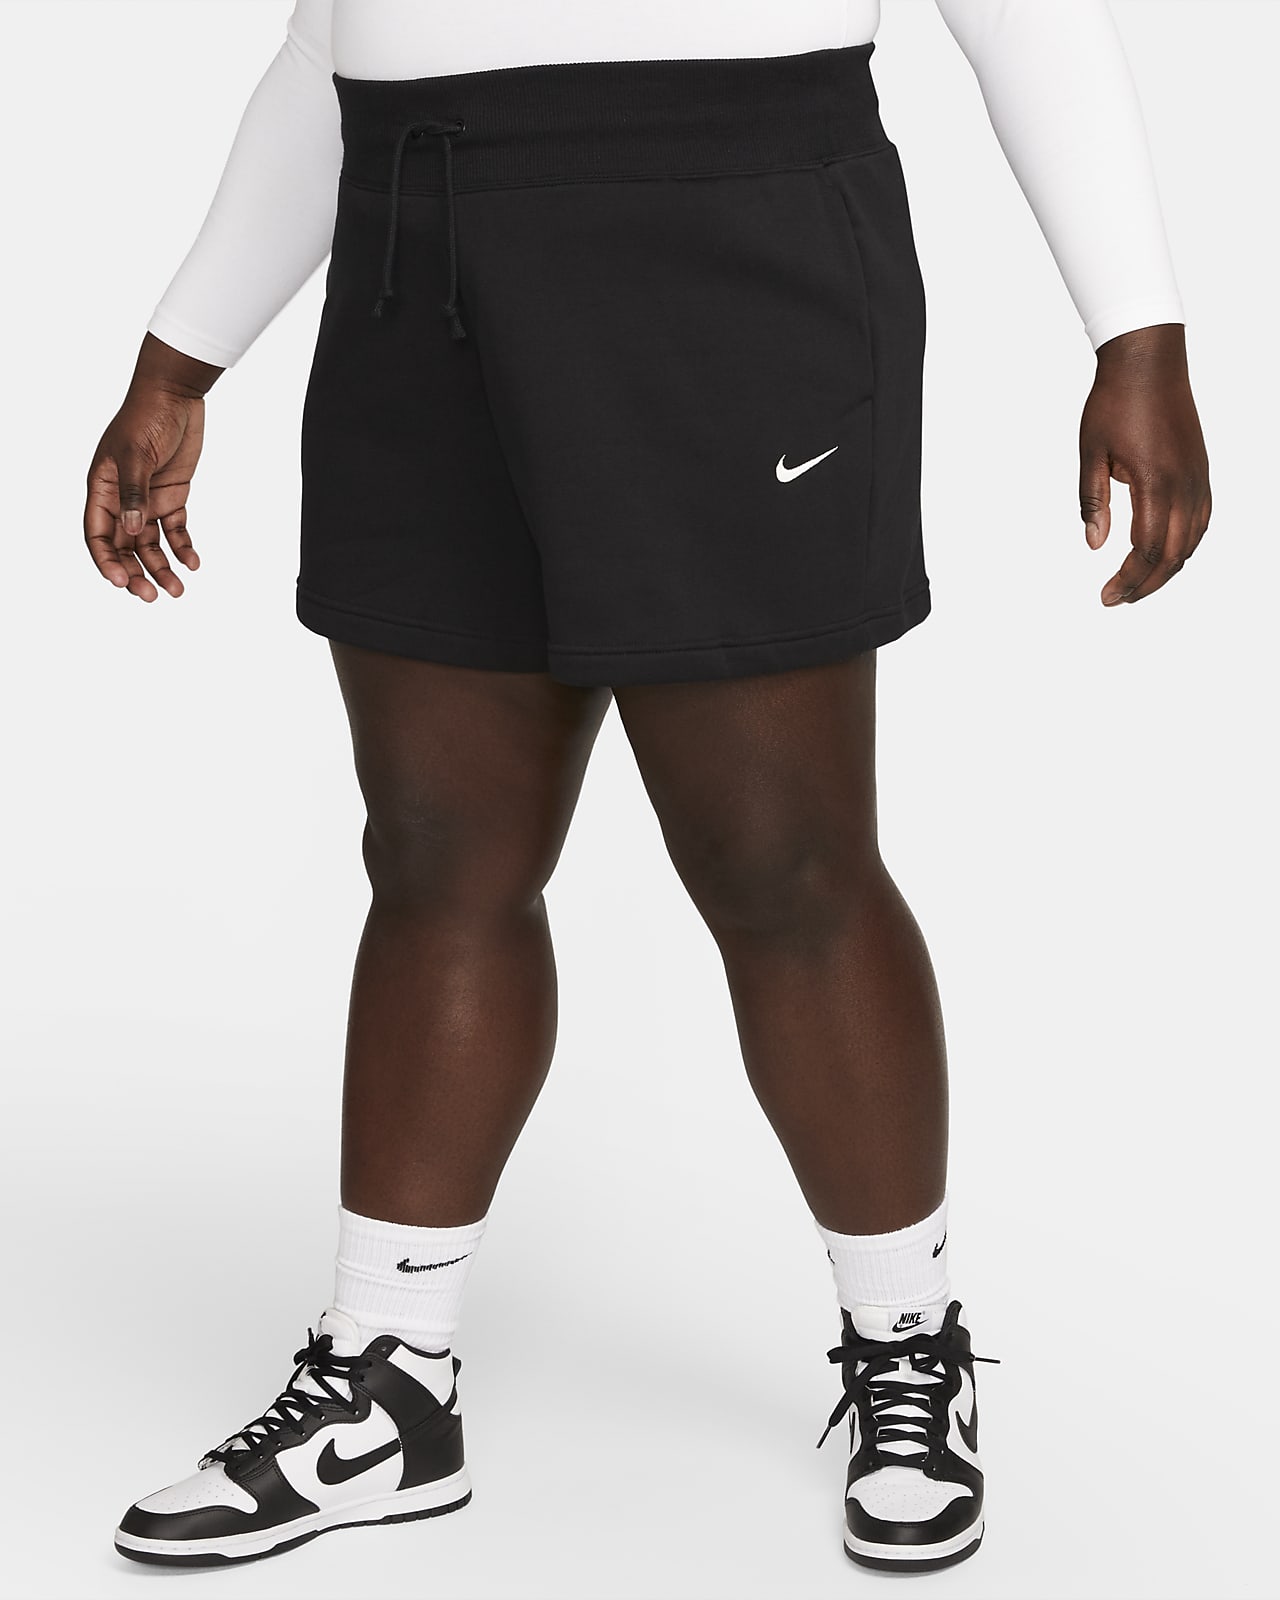 Short ample à taille haute Nike Sportswear Phoenix Fleece pour femme (grande taille)